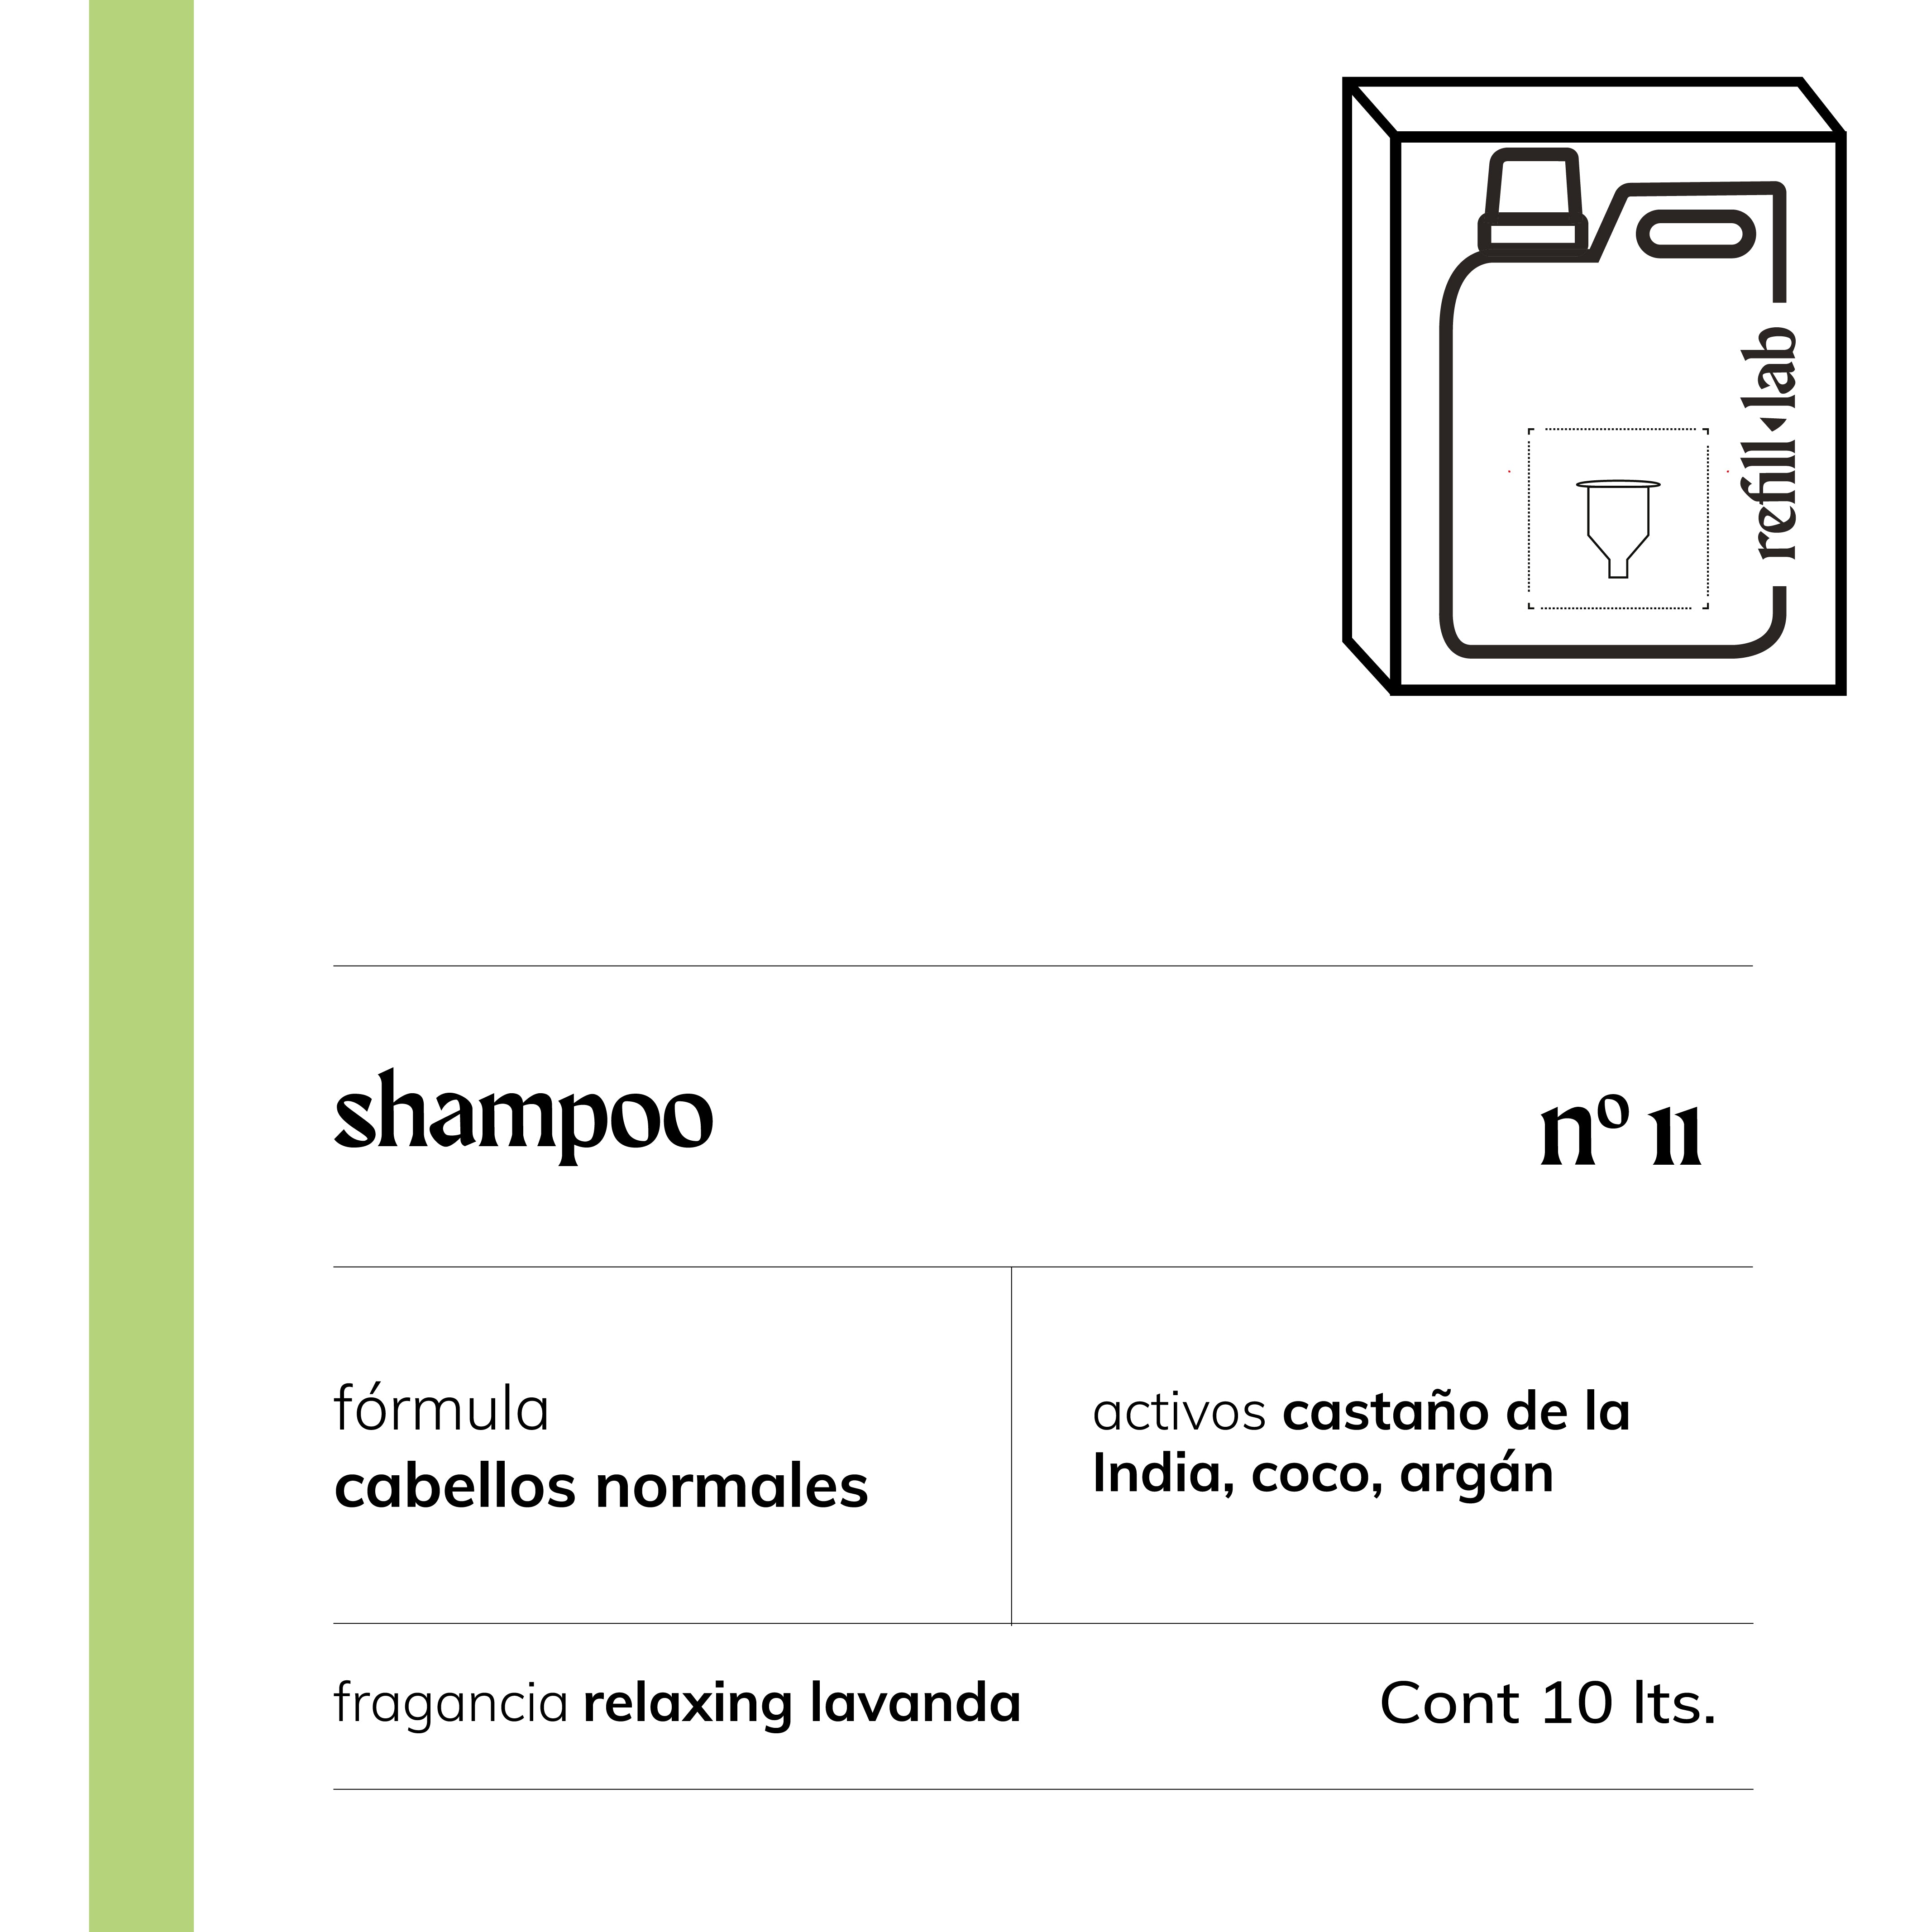 Shampoo sin sulfatos - Cabellos Normales - Relaxing Lavanda - 10 lts.